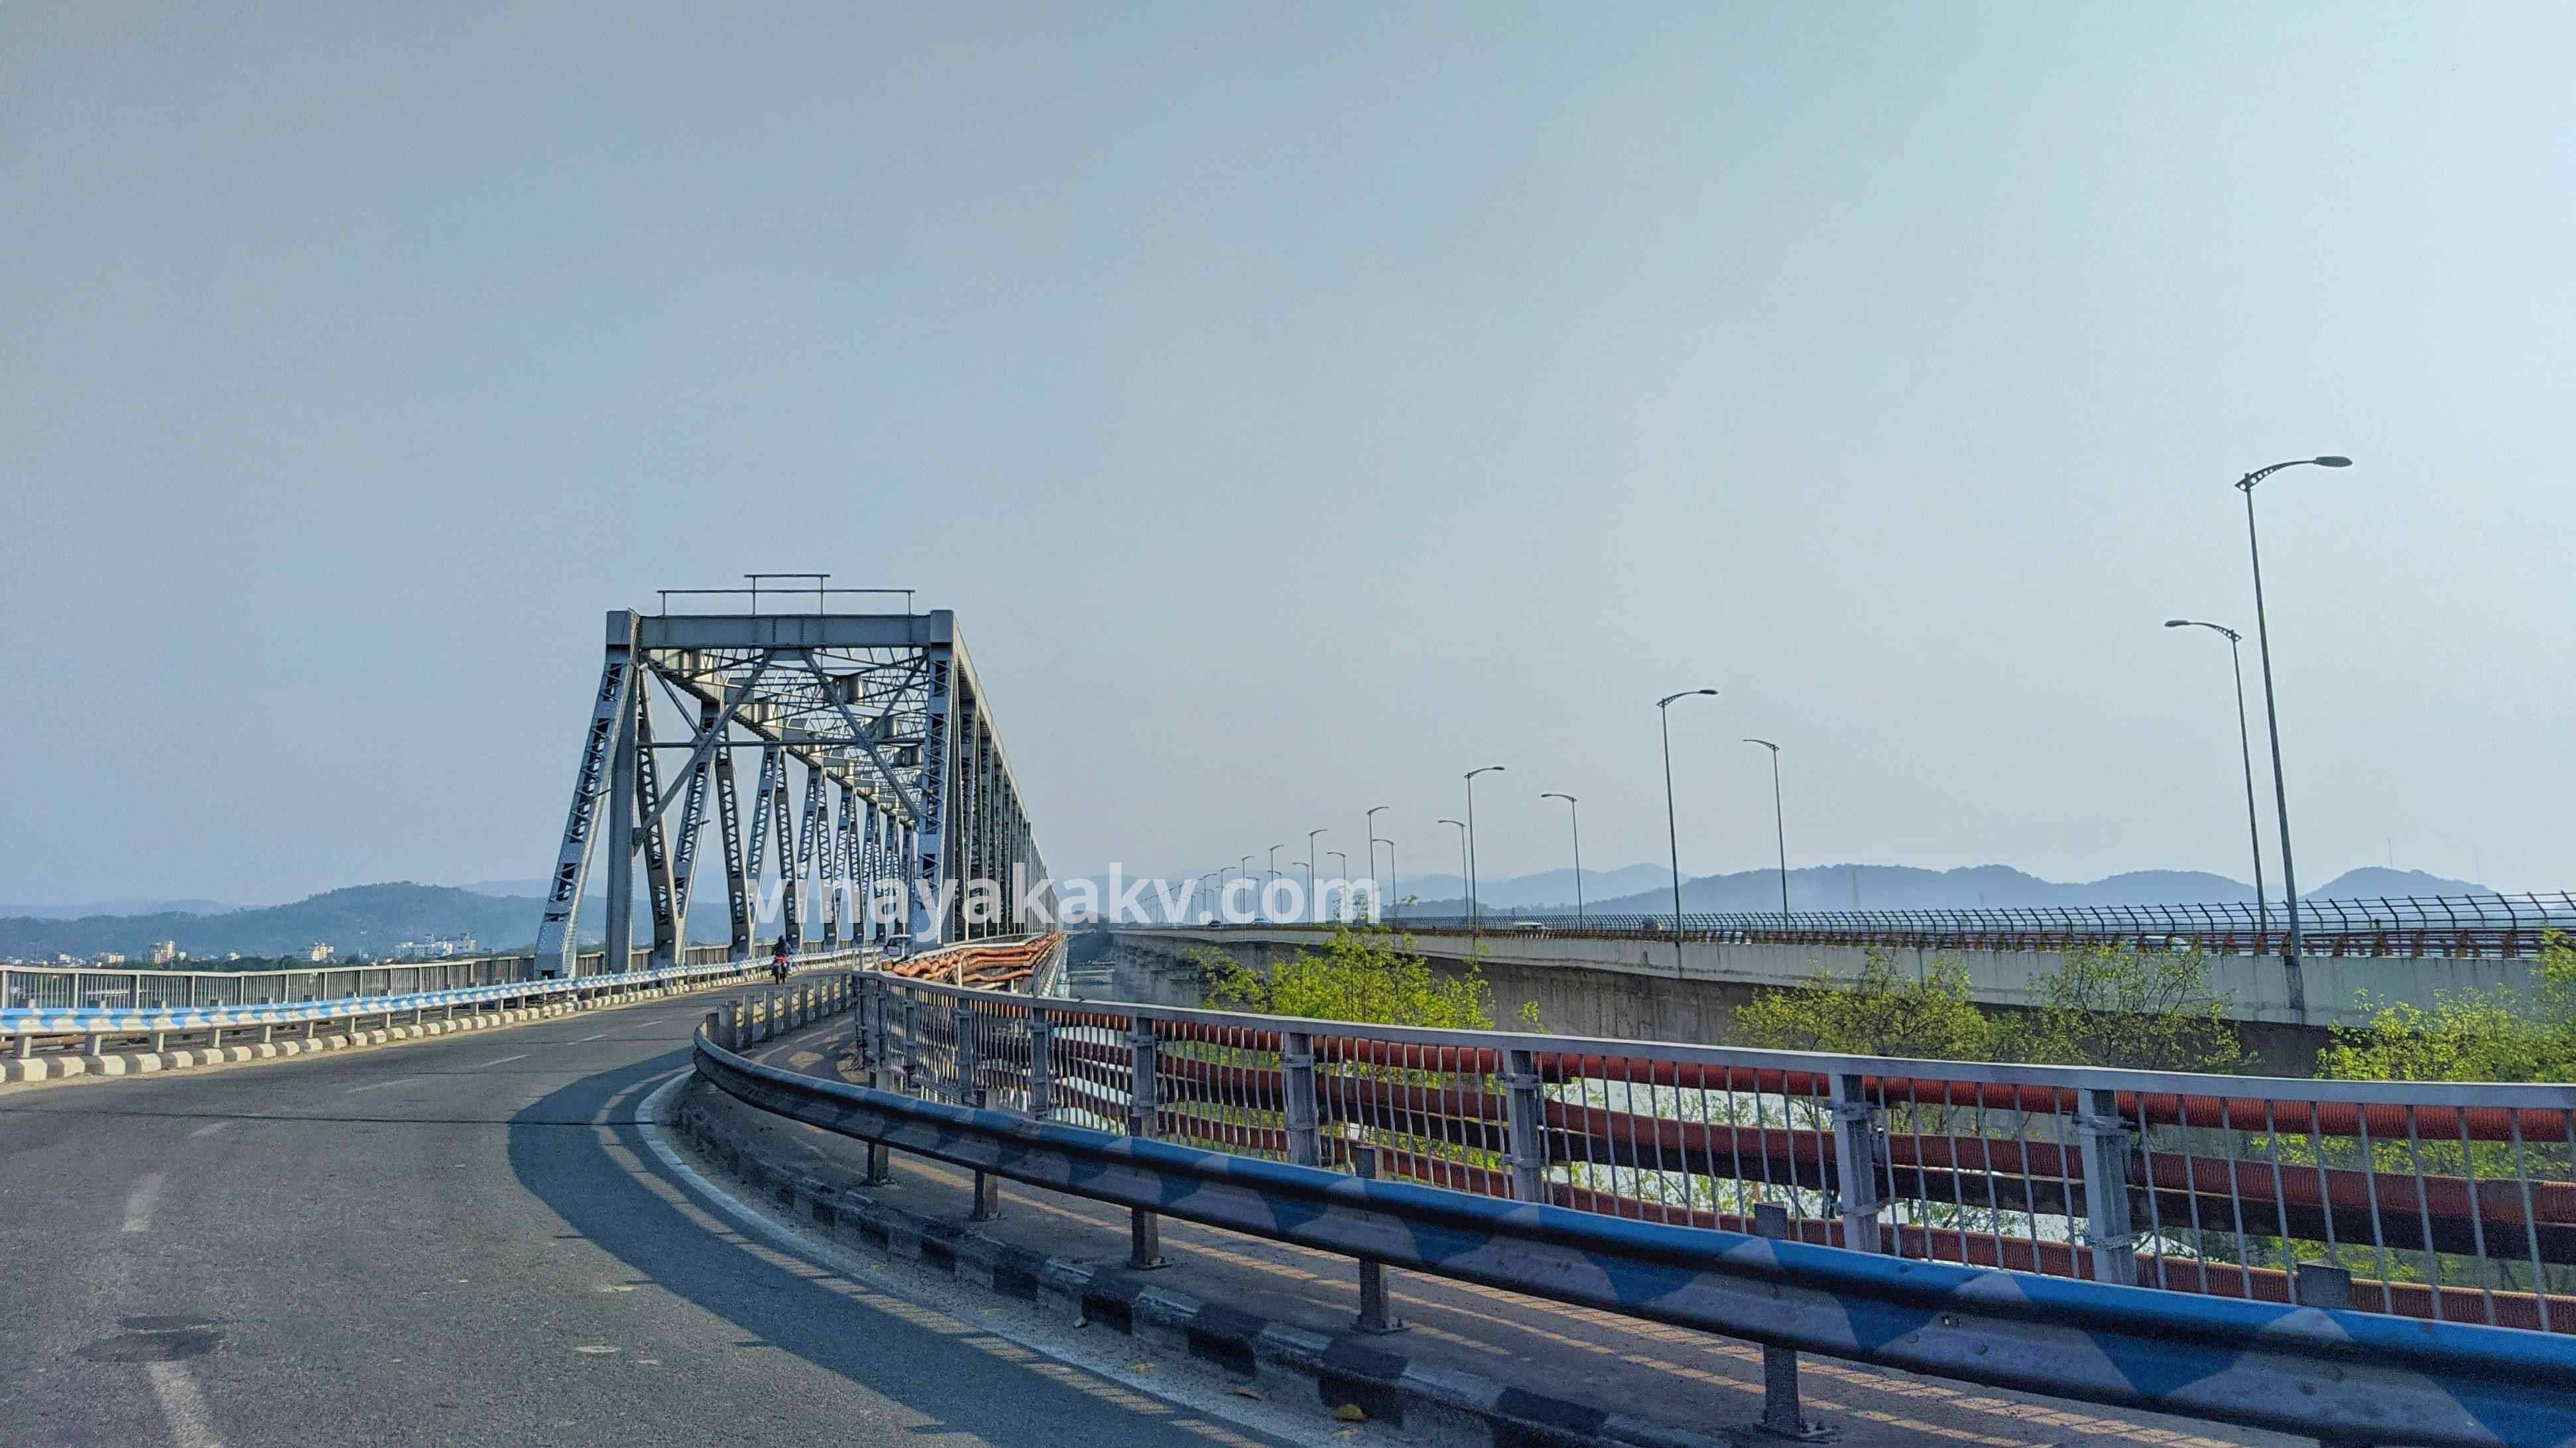 Sarighat Bridge - The first bridge built over the Brahmaputra River in Assam